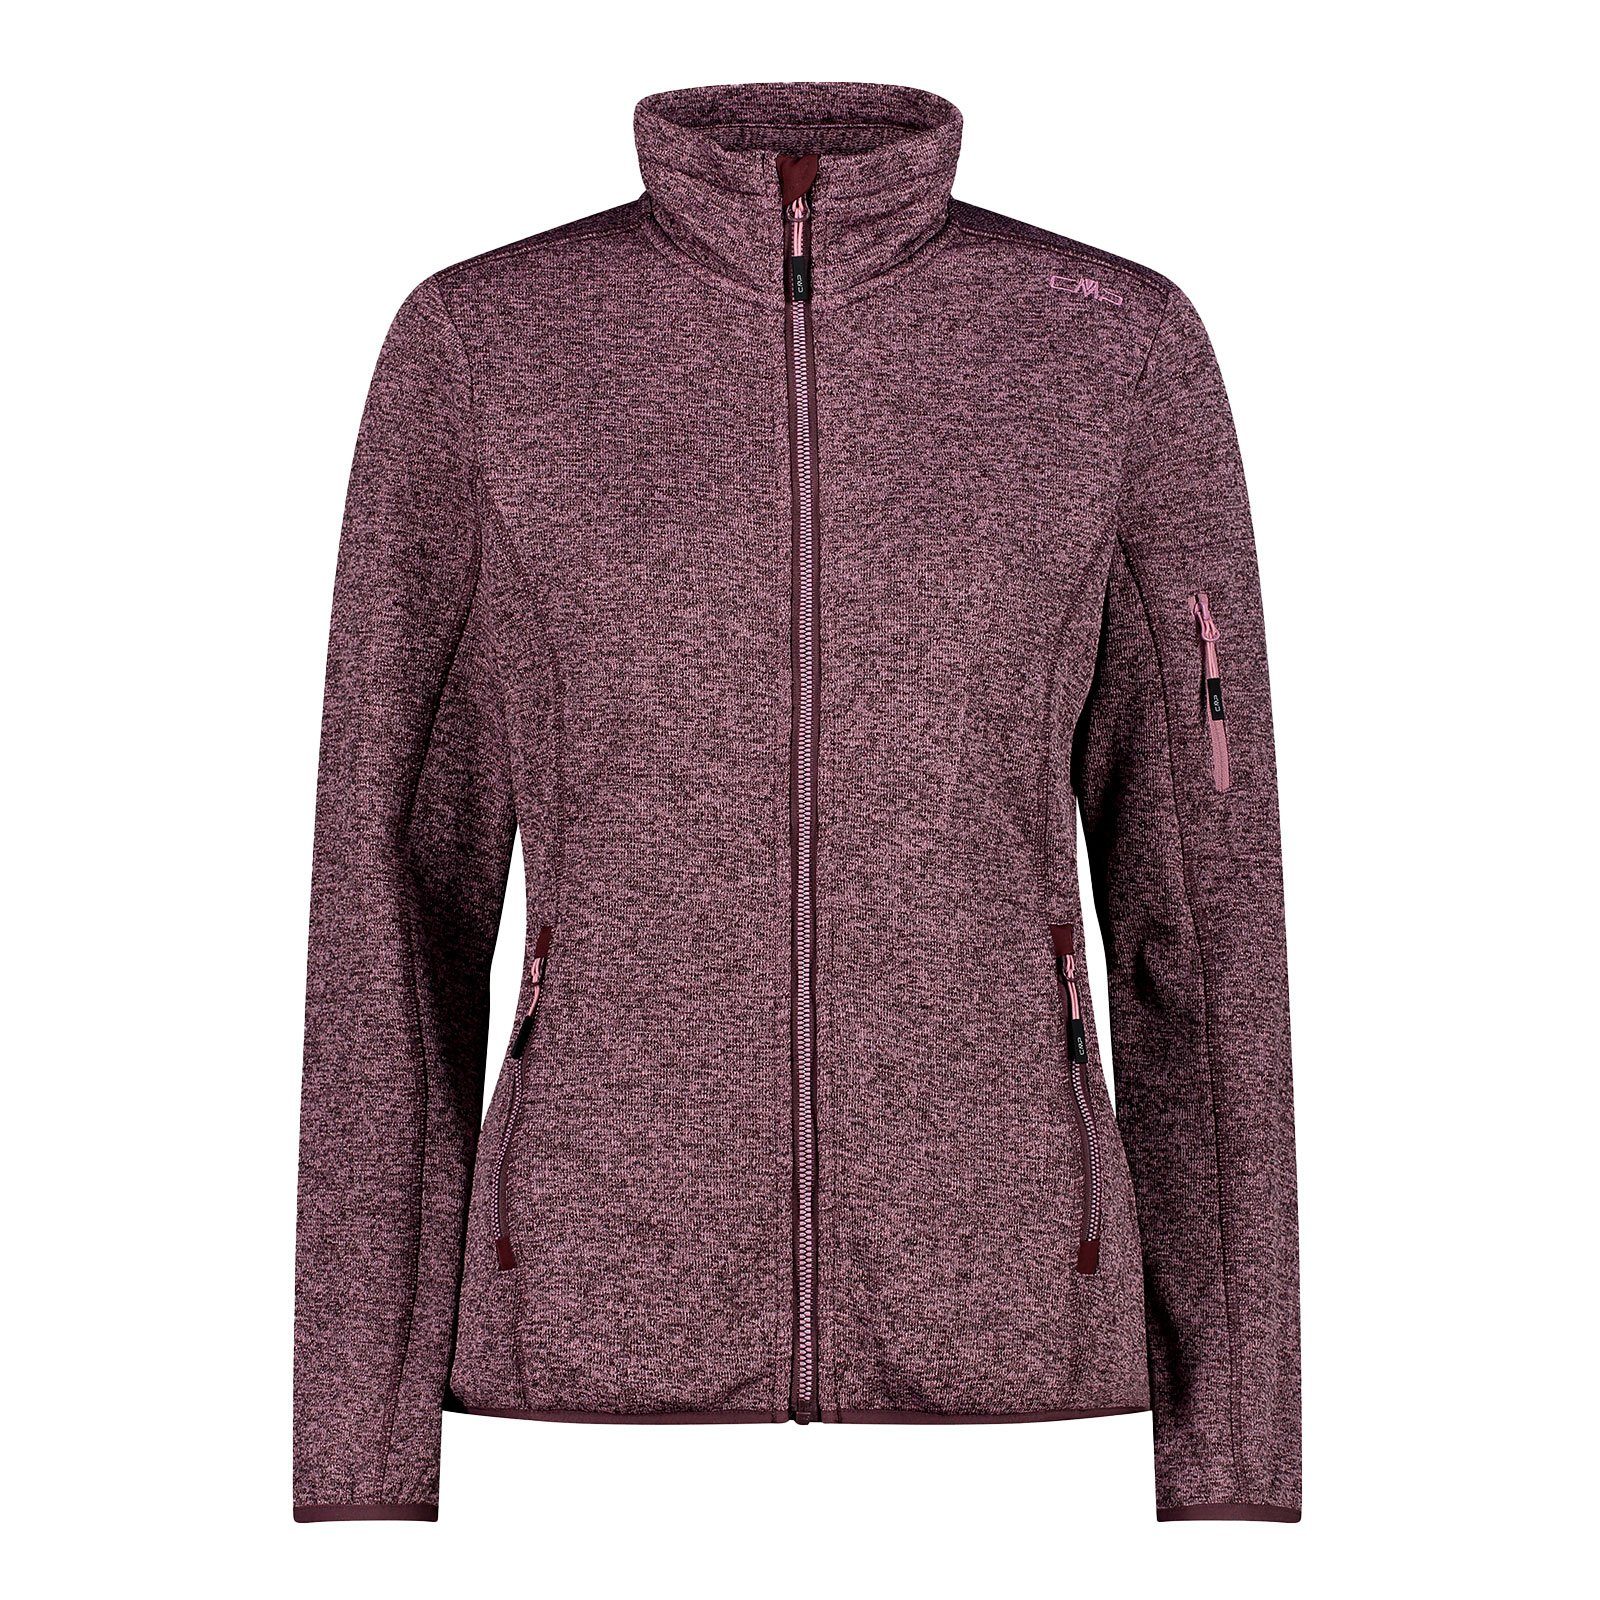 CMP Fleecejacke Woman Jacket aus besonders Knit Tech™ Material 36CN plum / fard